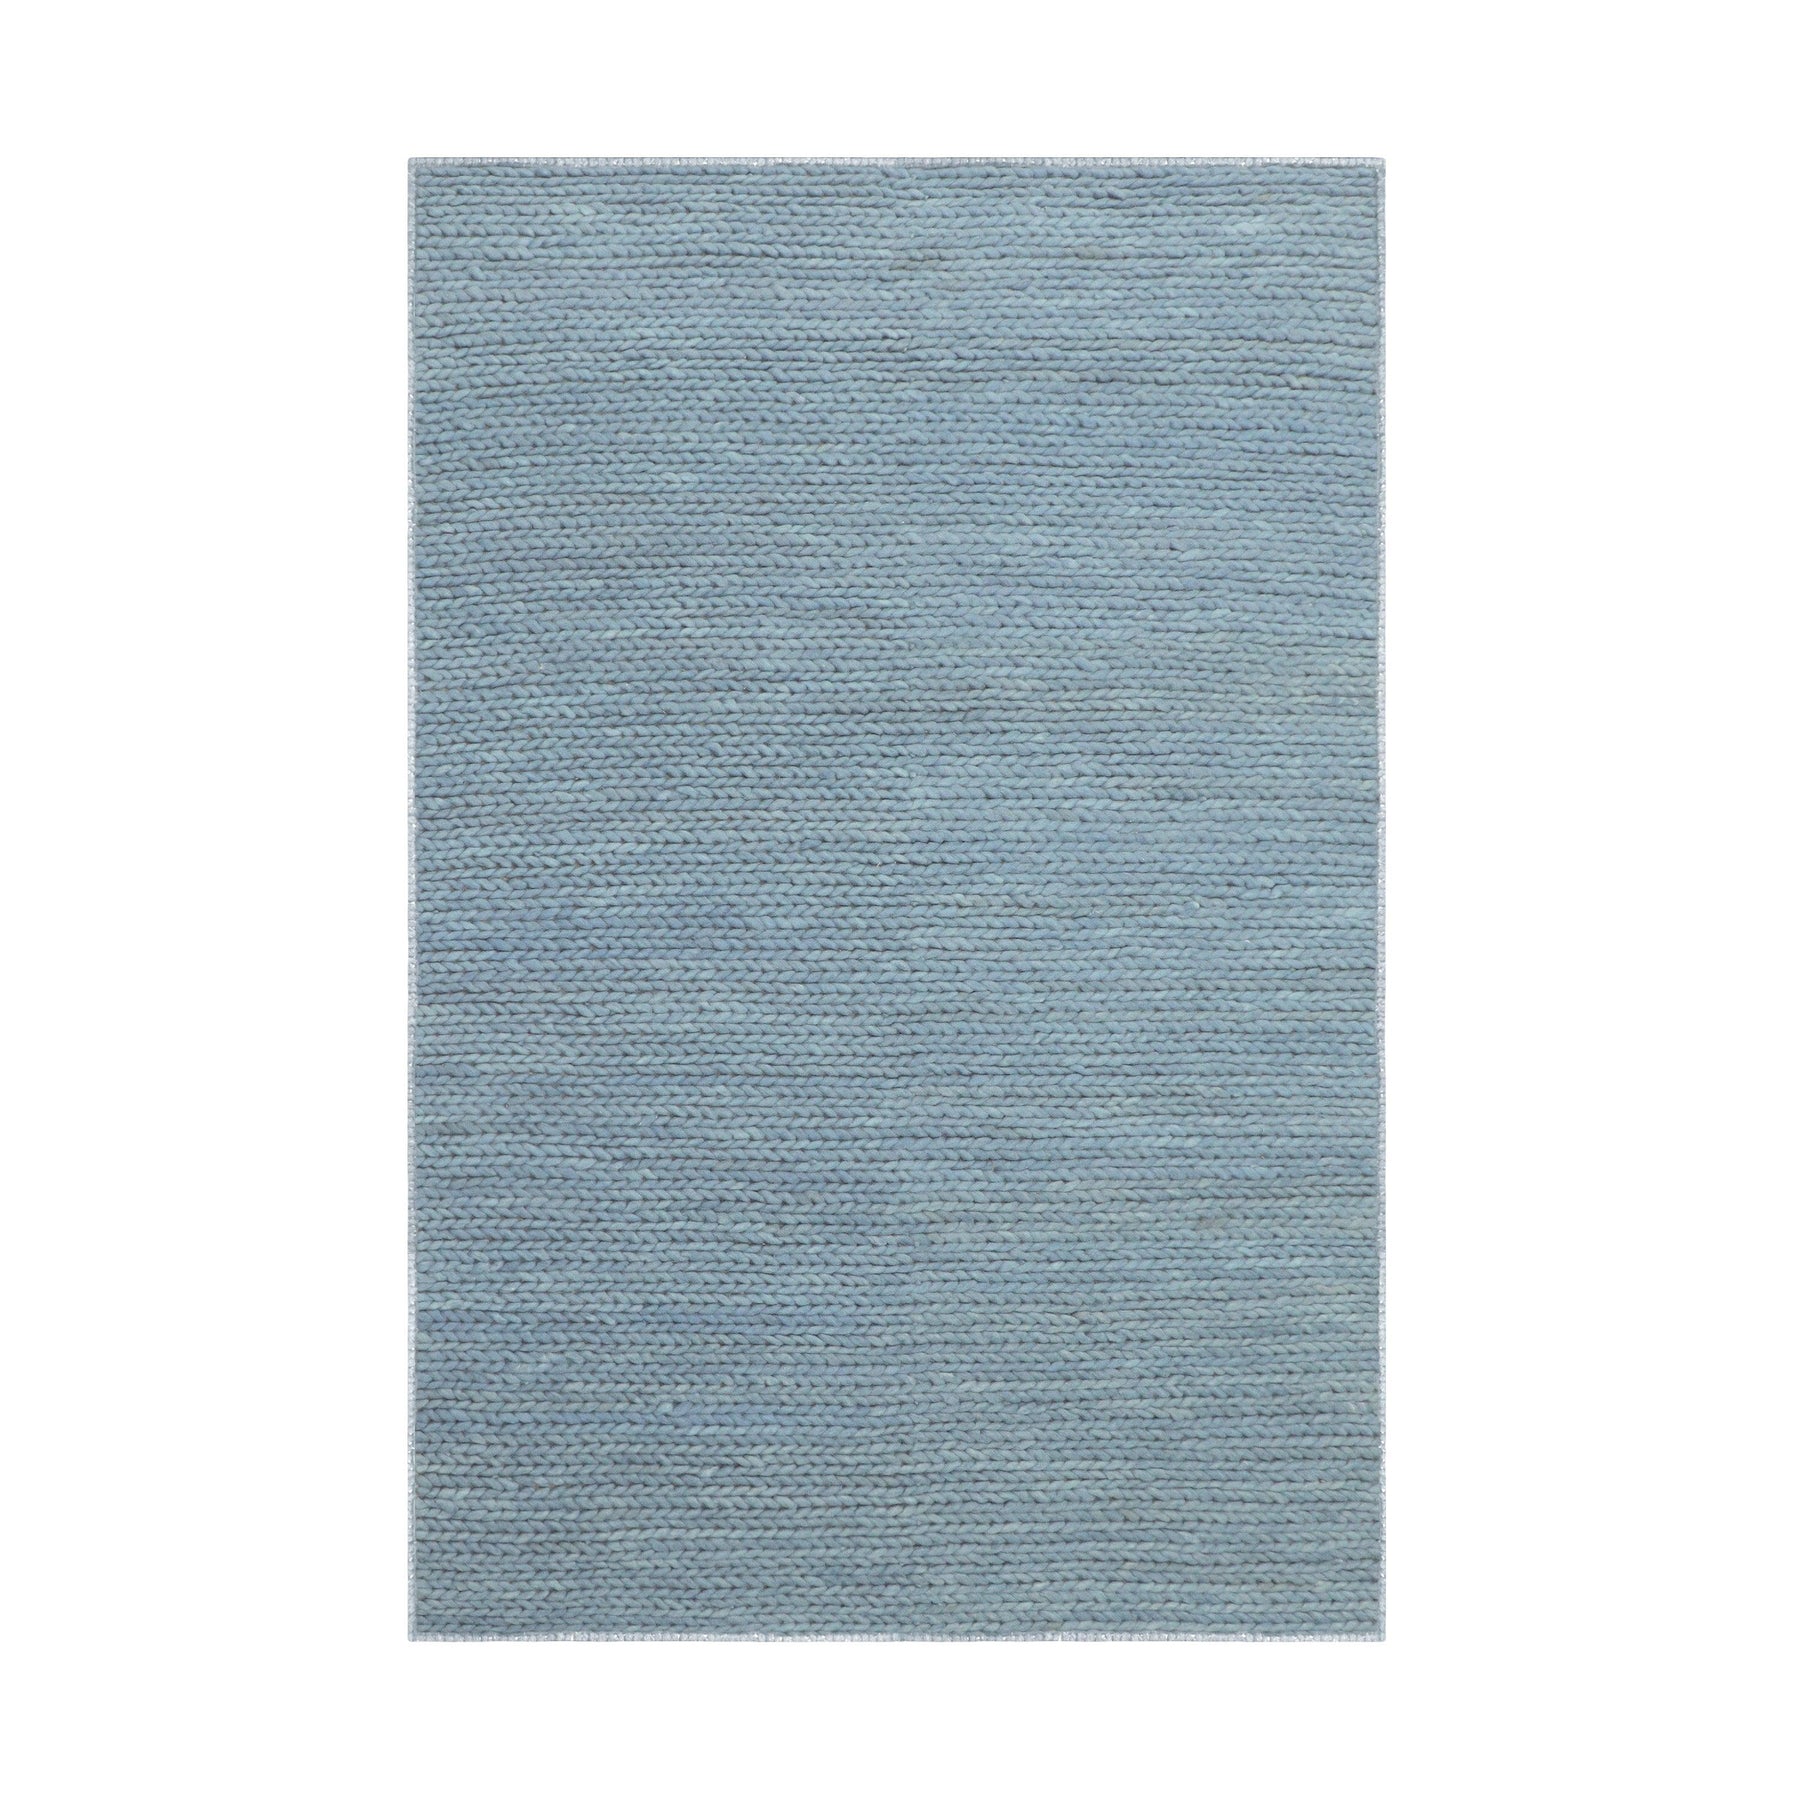 Superior Aero Hand-Braided Wool Indoor Area or Runner Rug - Light Blue